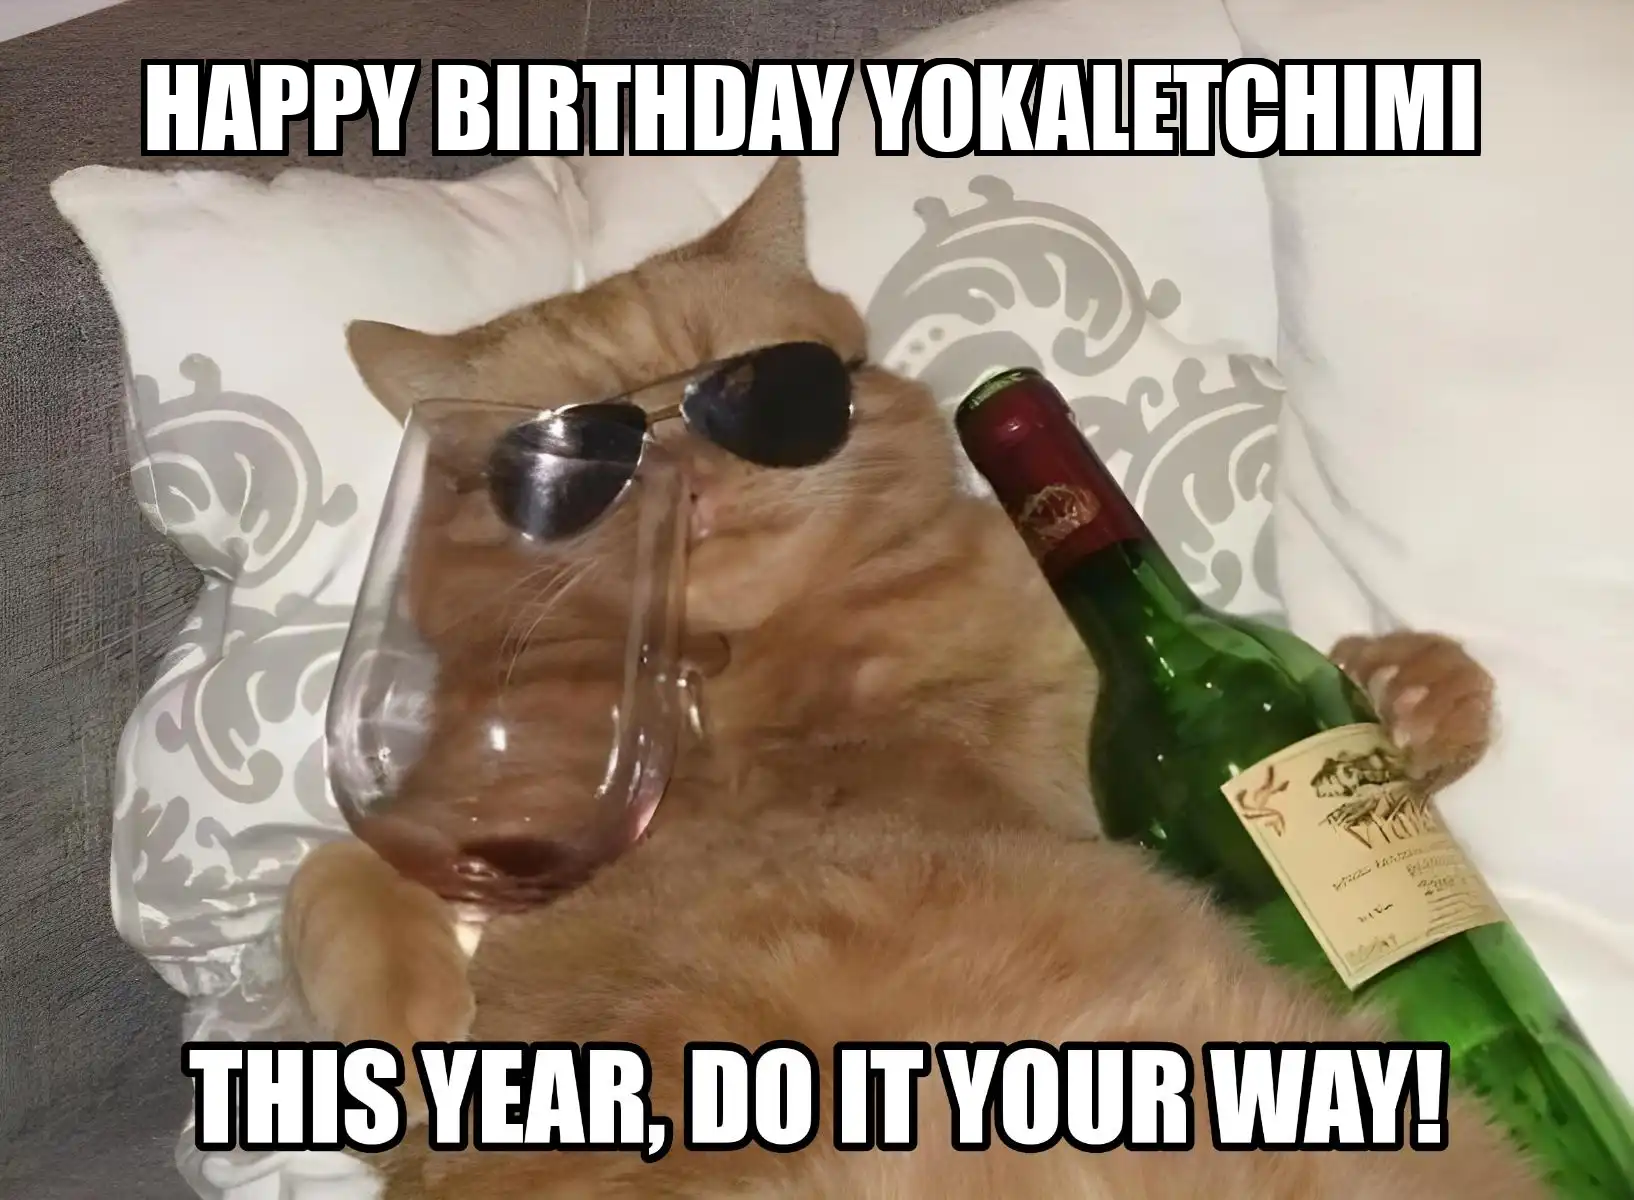 Happy Birthday Yokaletchimi This Year Do It Your Way Meme